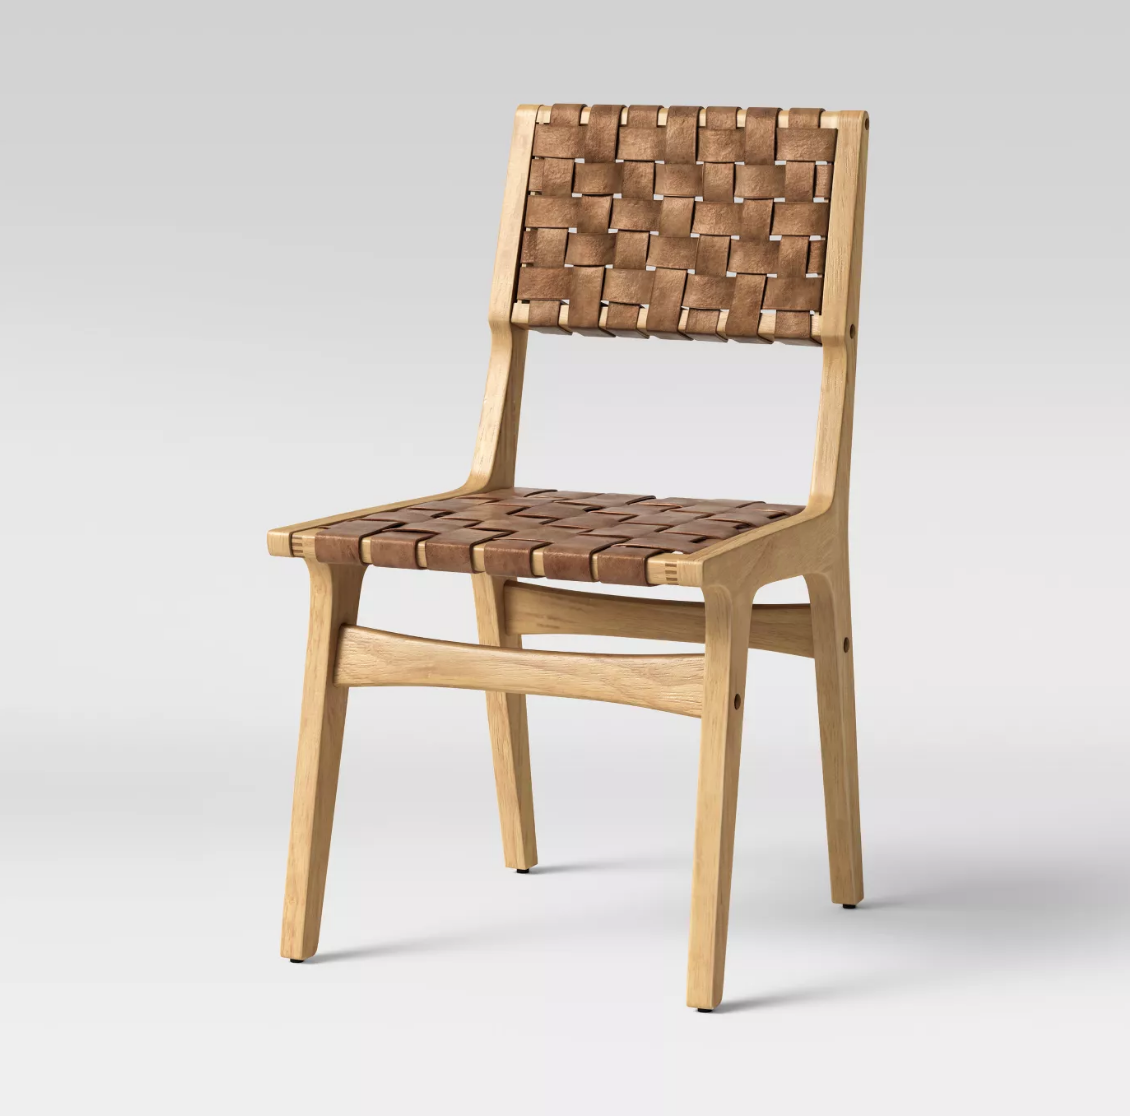 Target - Ceylon Woven Dining Chair - $140